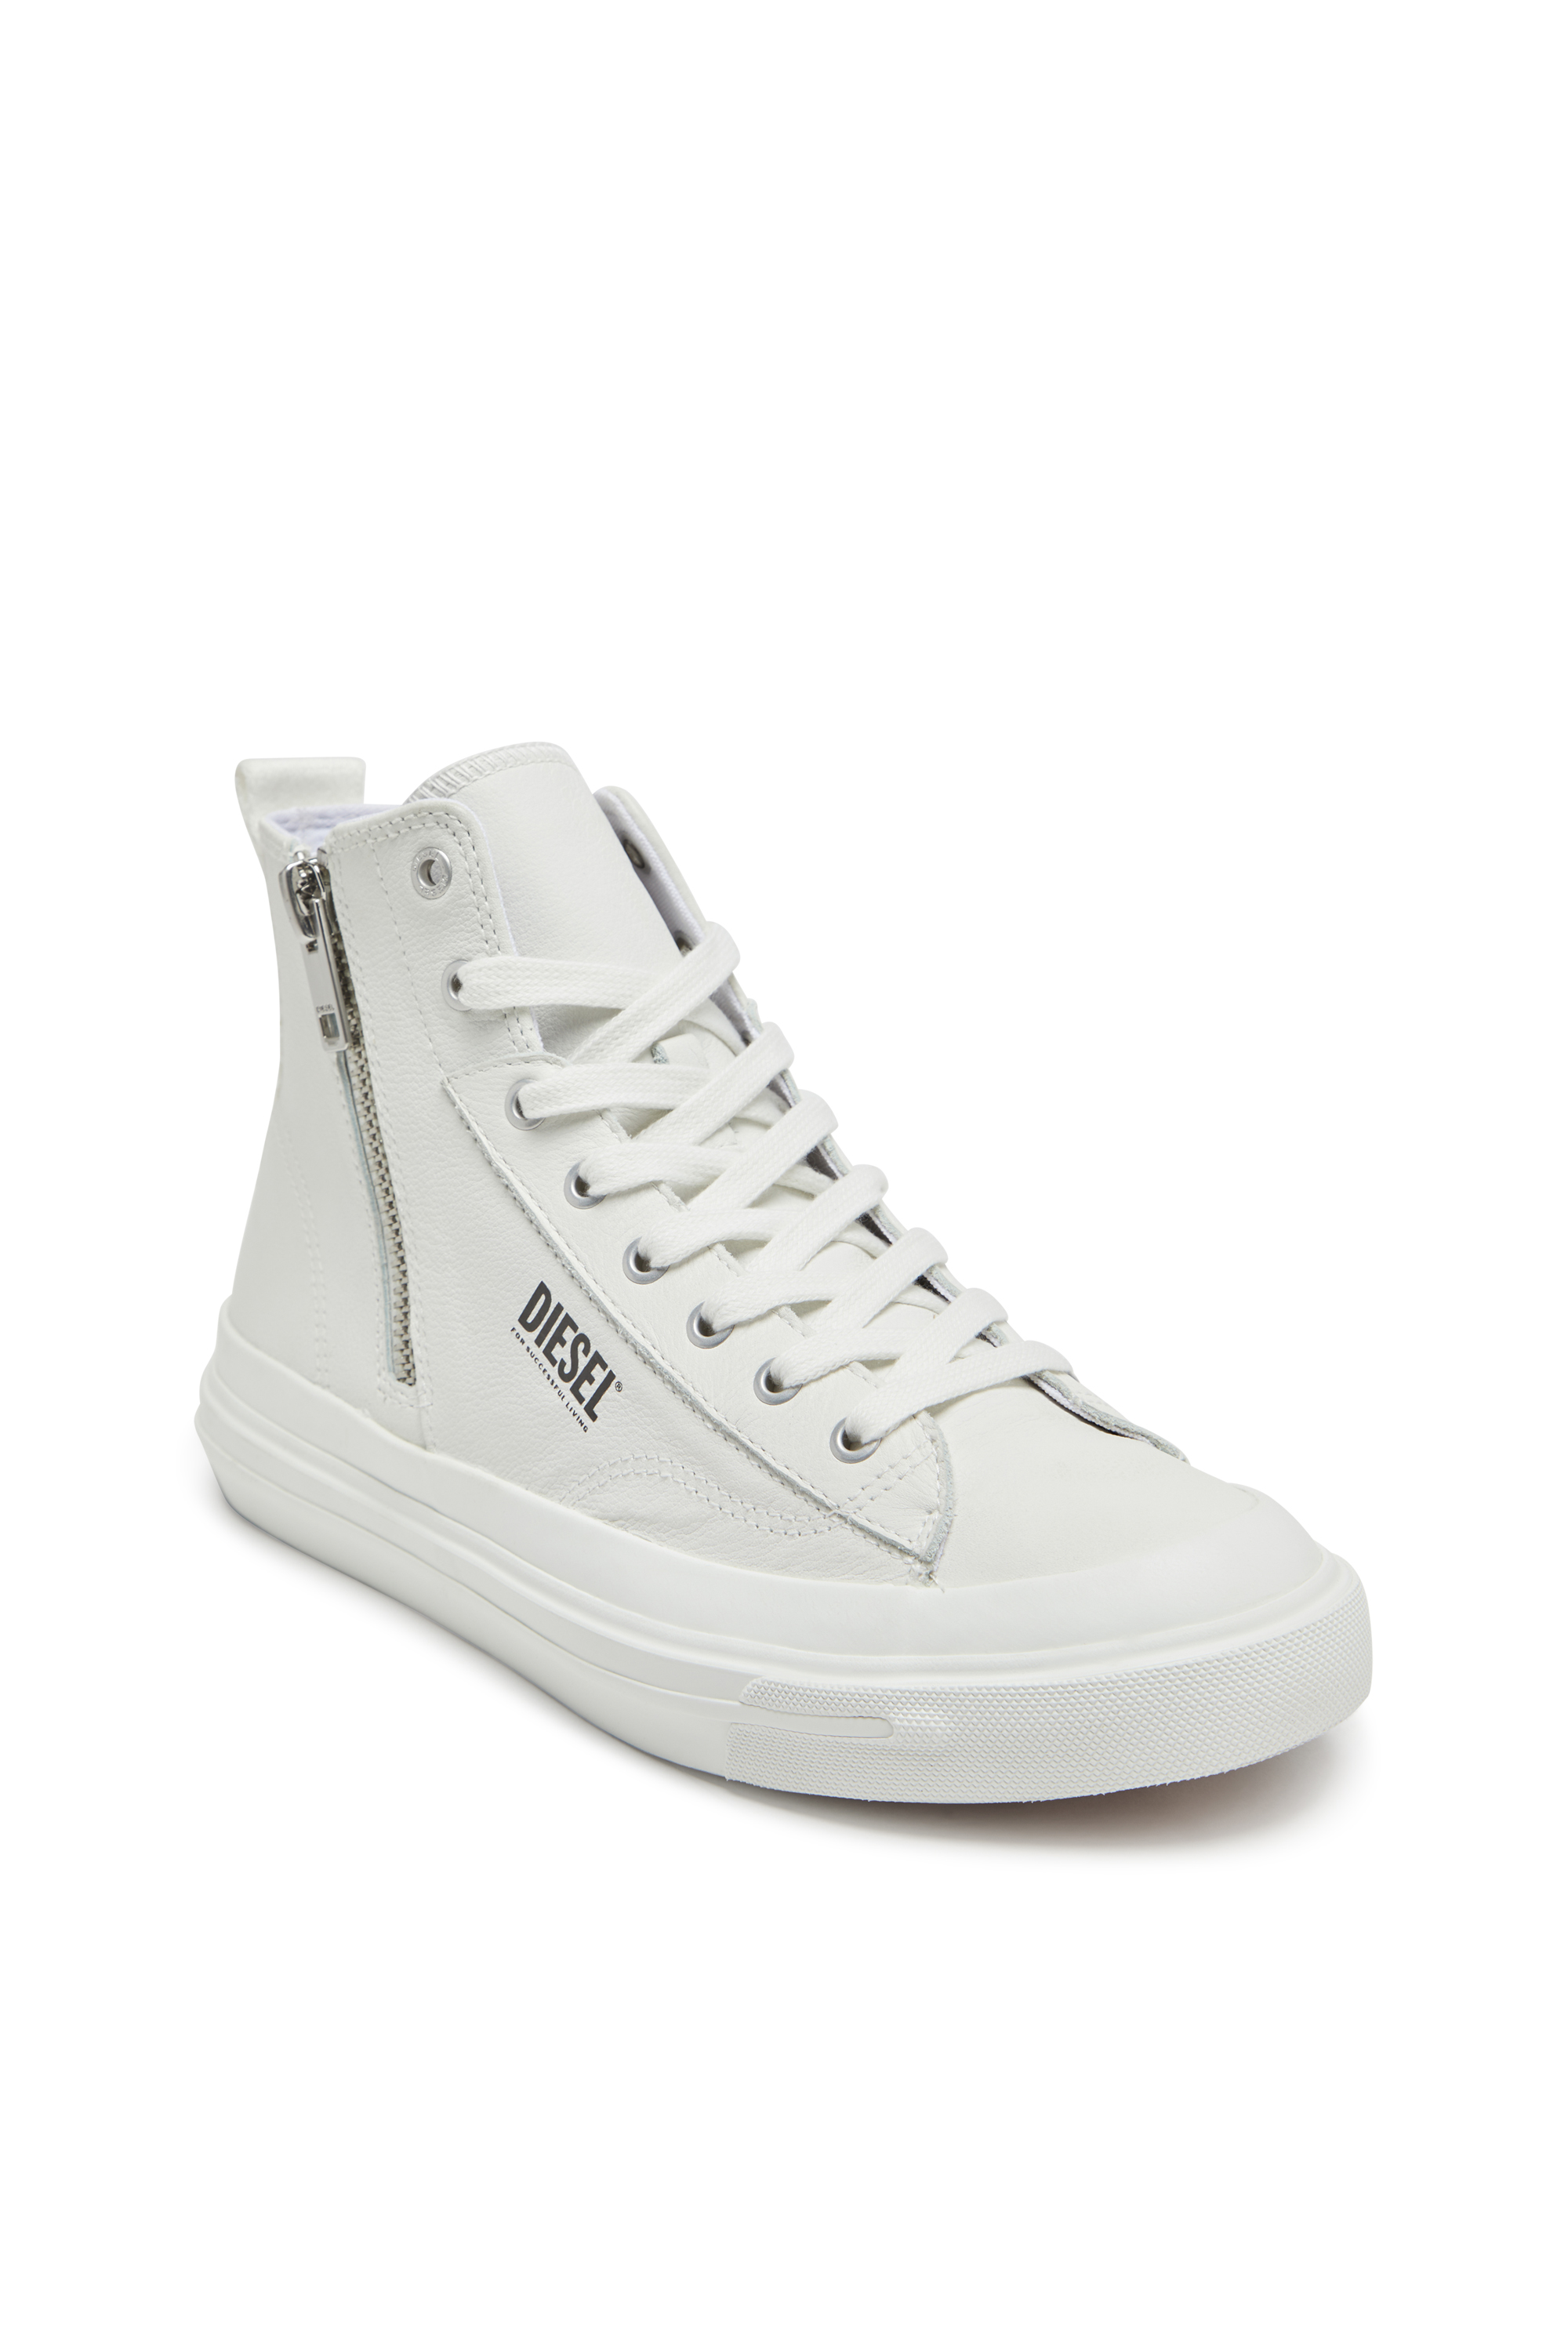 Diesel - S-ATHOS DV MID, Man S-Athos Dv Mid - High-top sneakers with side zip in White - Image 7